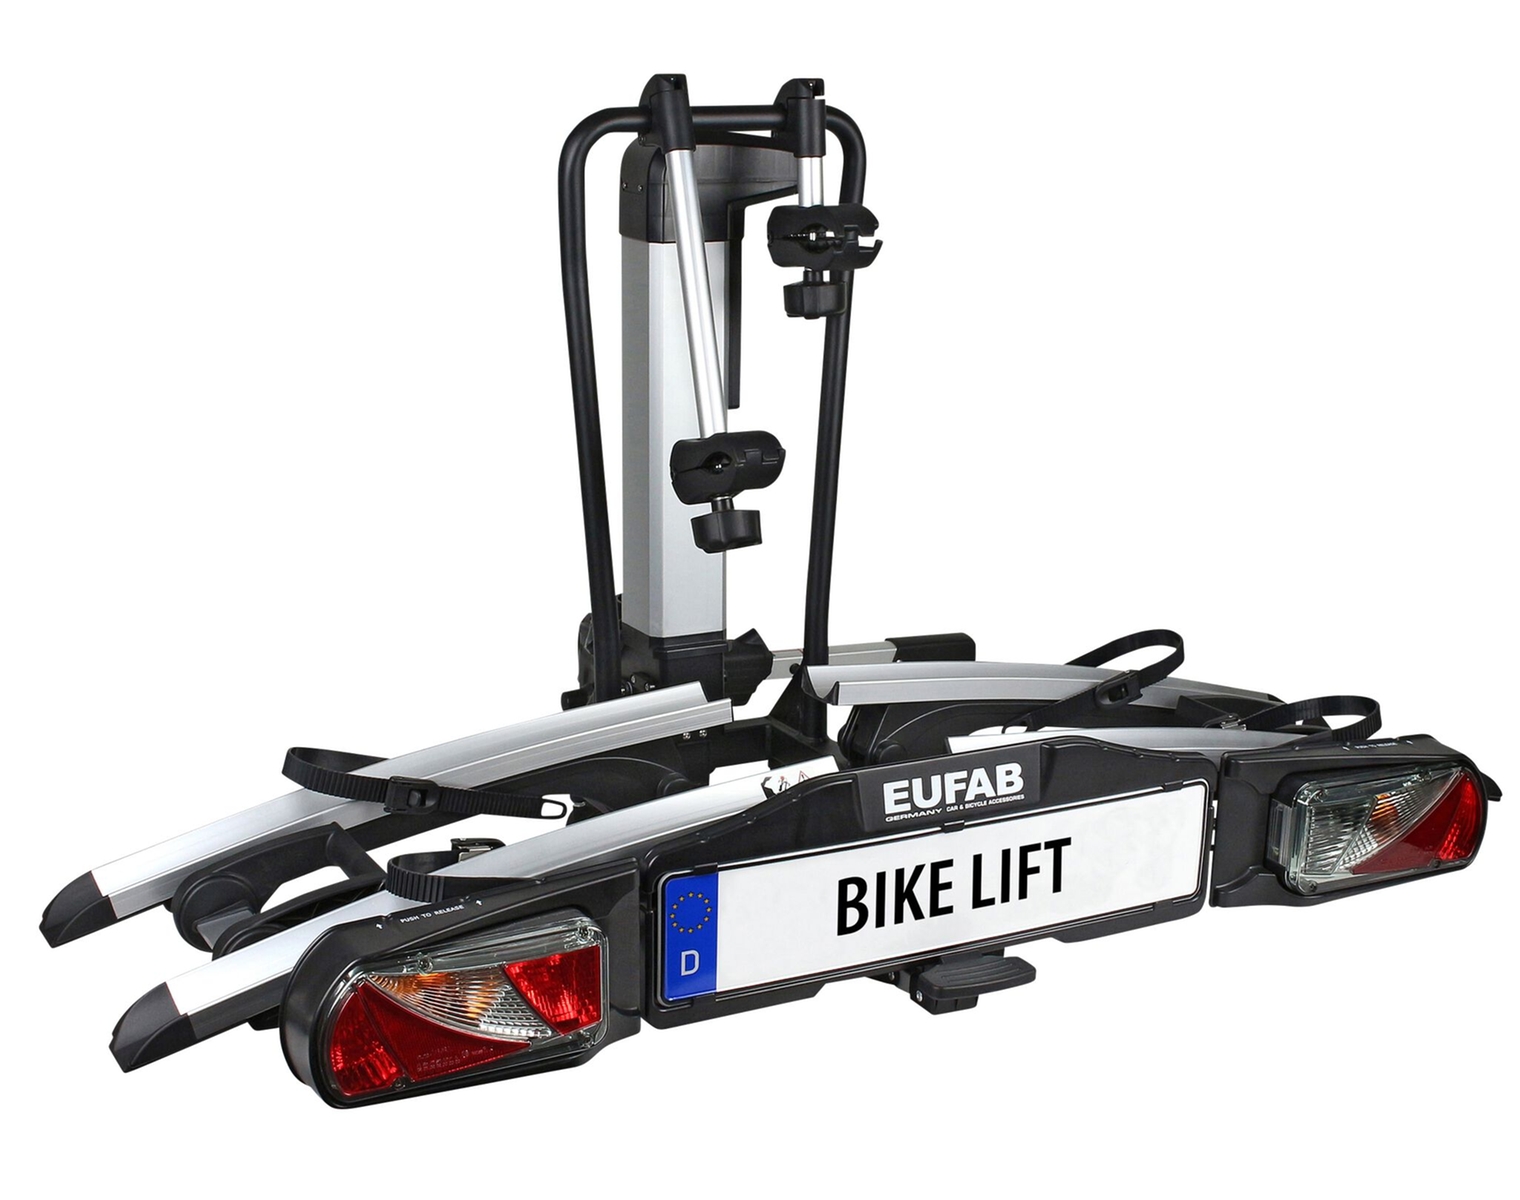 EUFAB Fahrrad-Heckträger BIKE LIFT, für die Anhängerkupplung | Fahrradträger & Transport